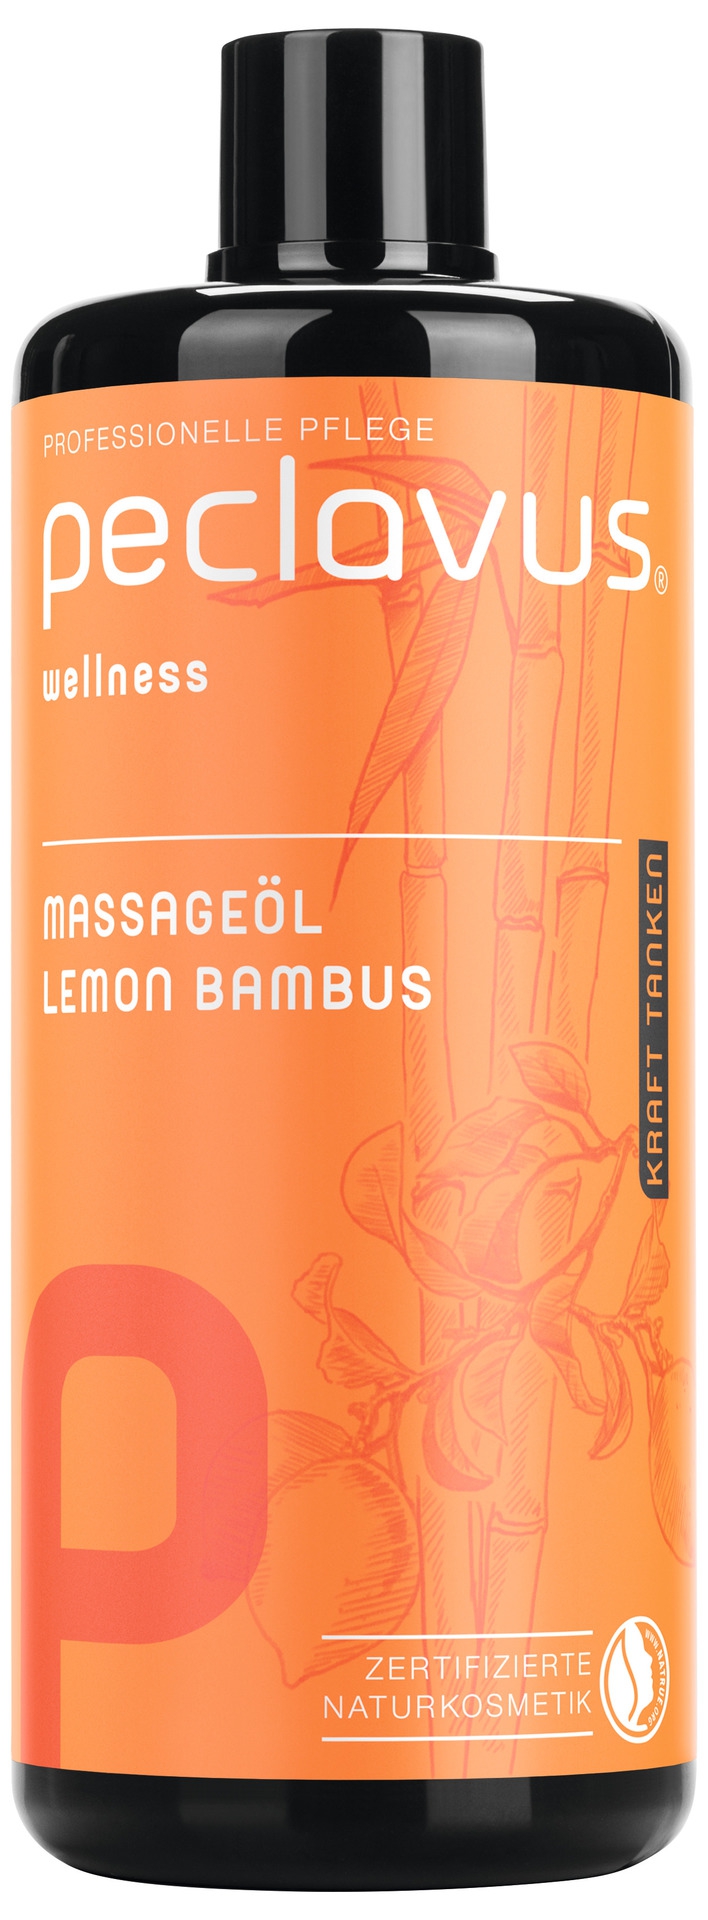 PECLAVUS Massageöl Lemon Bambus 500 ml | Kraft tanken